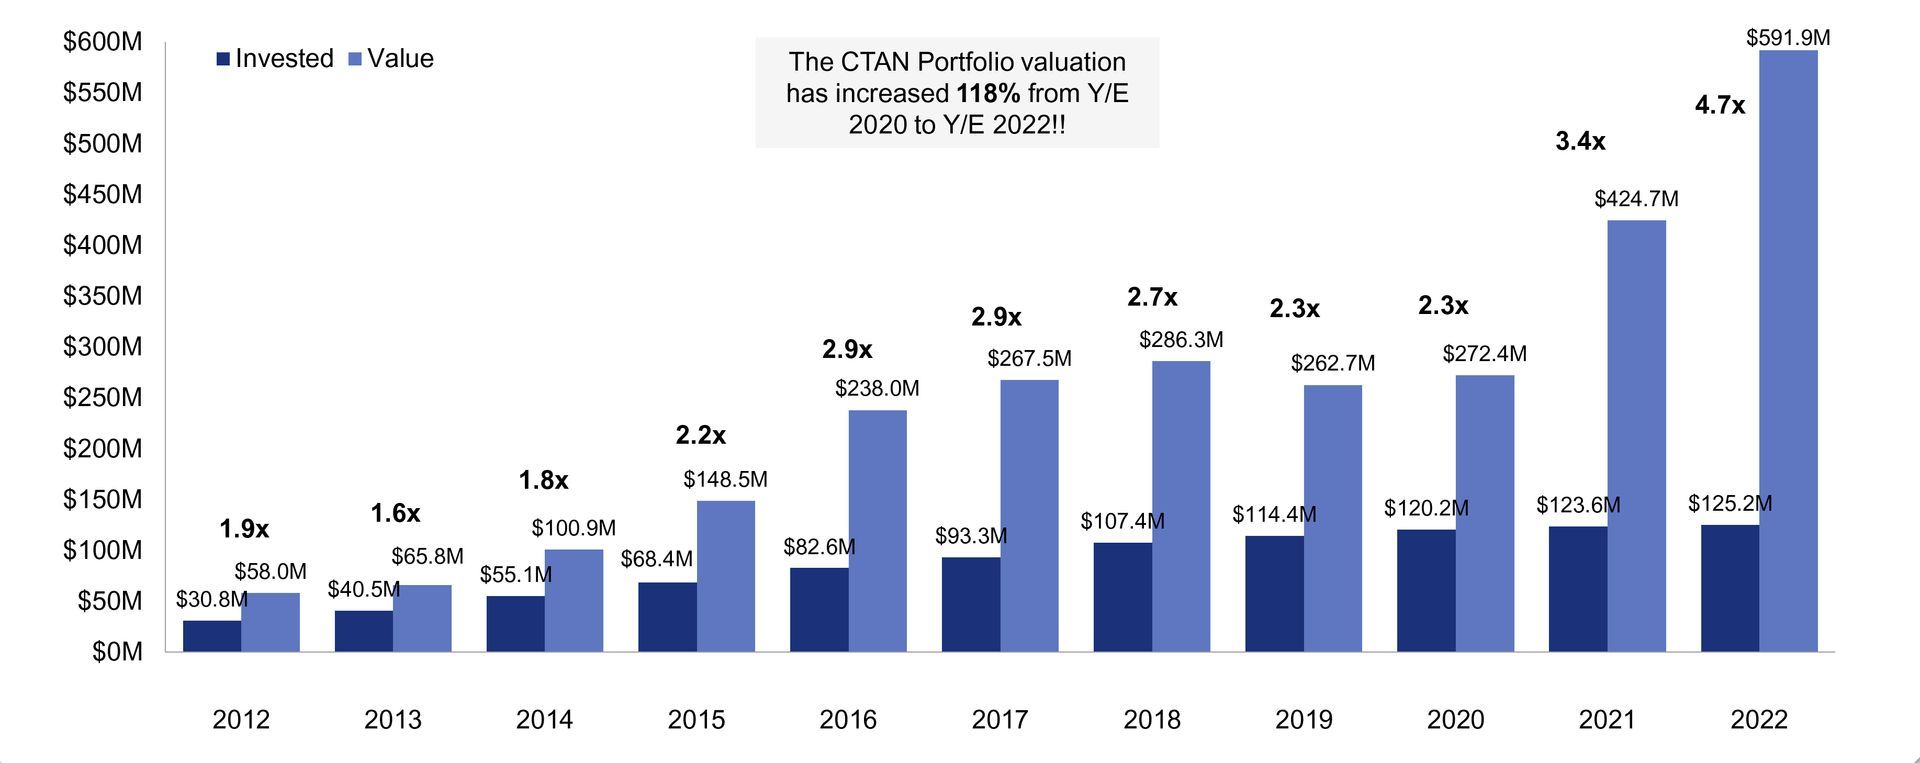 CTAN Portfolio Valuation Trends
2012-2022